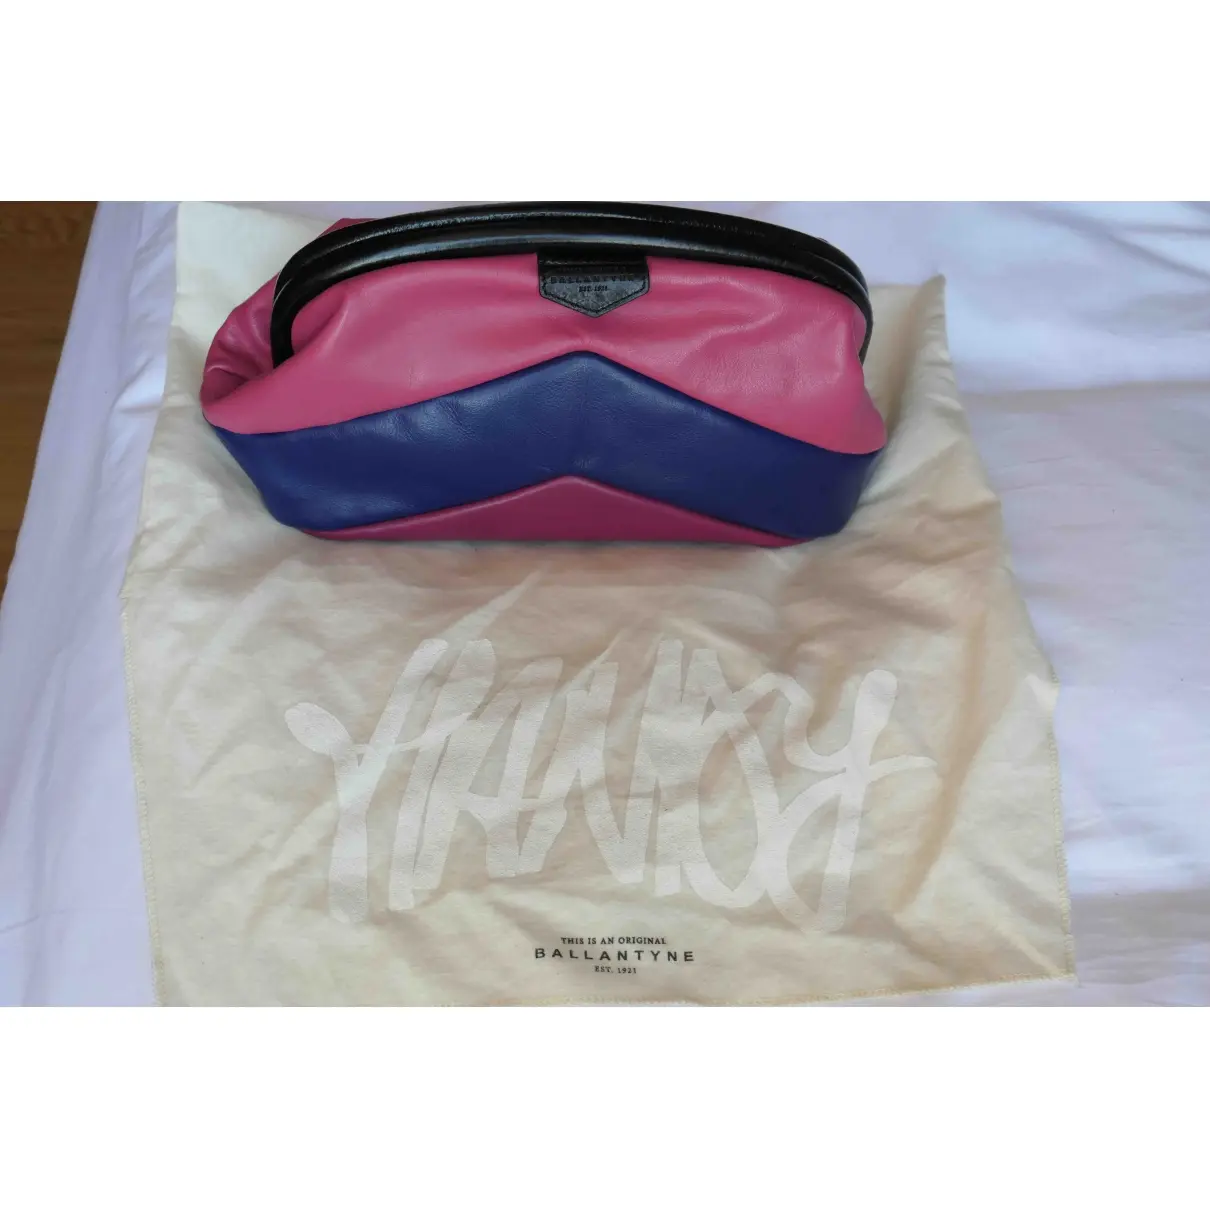 Ballantyne Leather clutch bag for sale